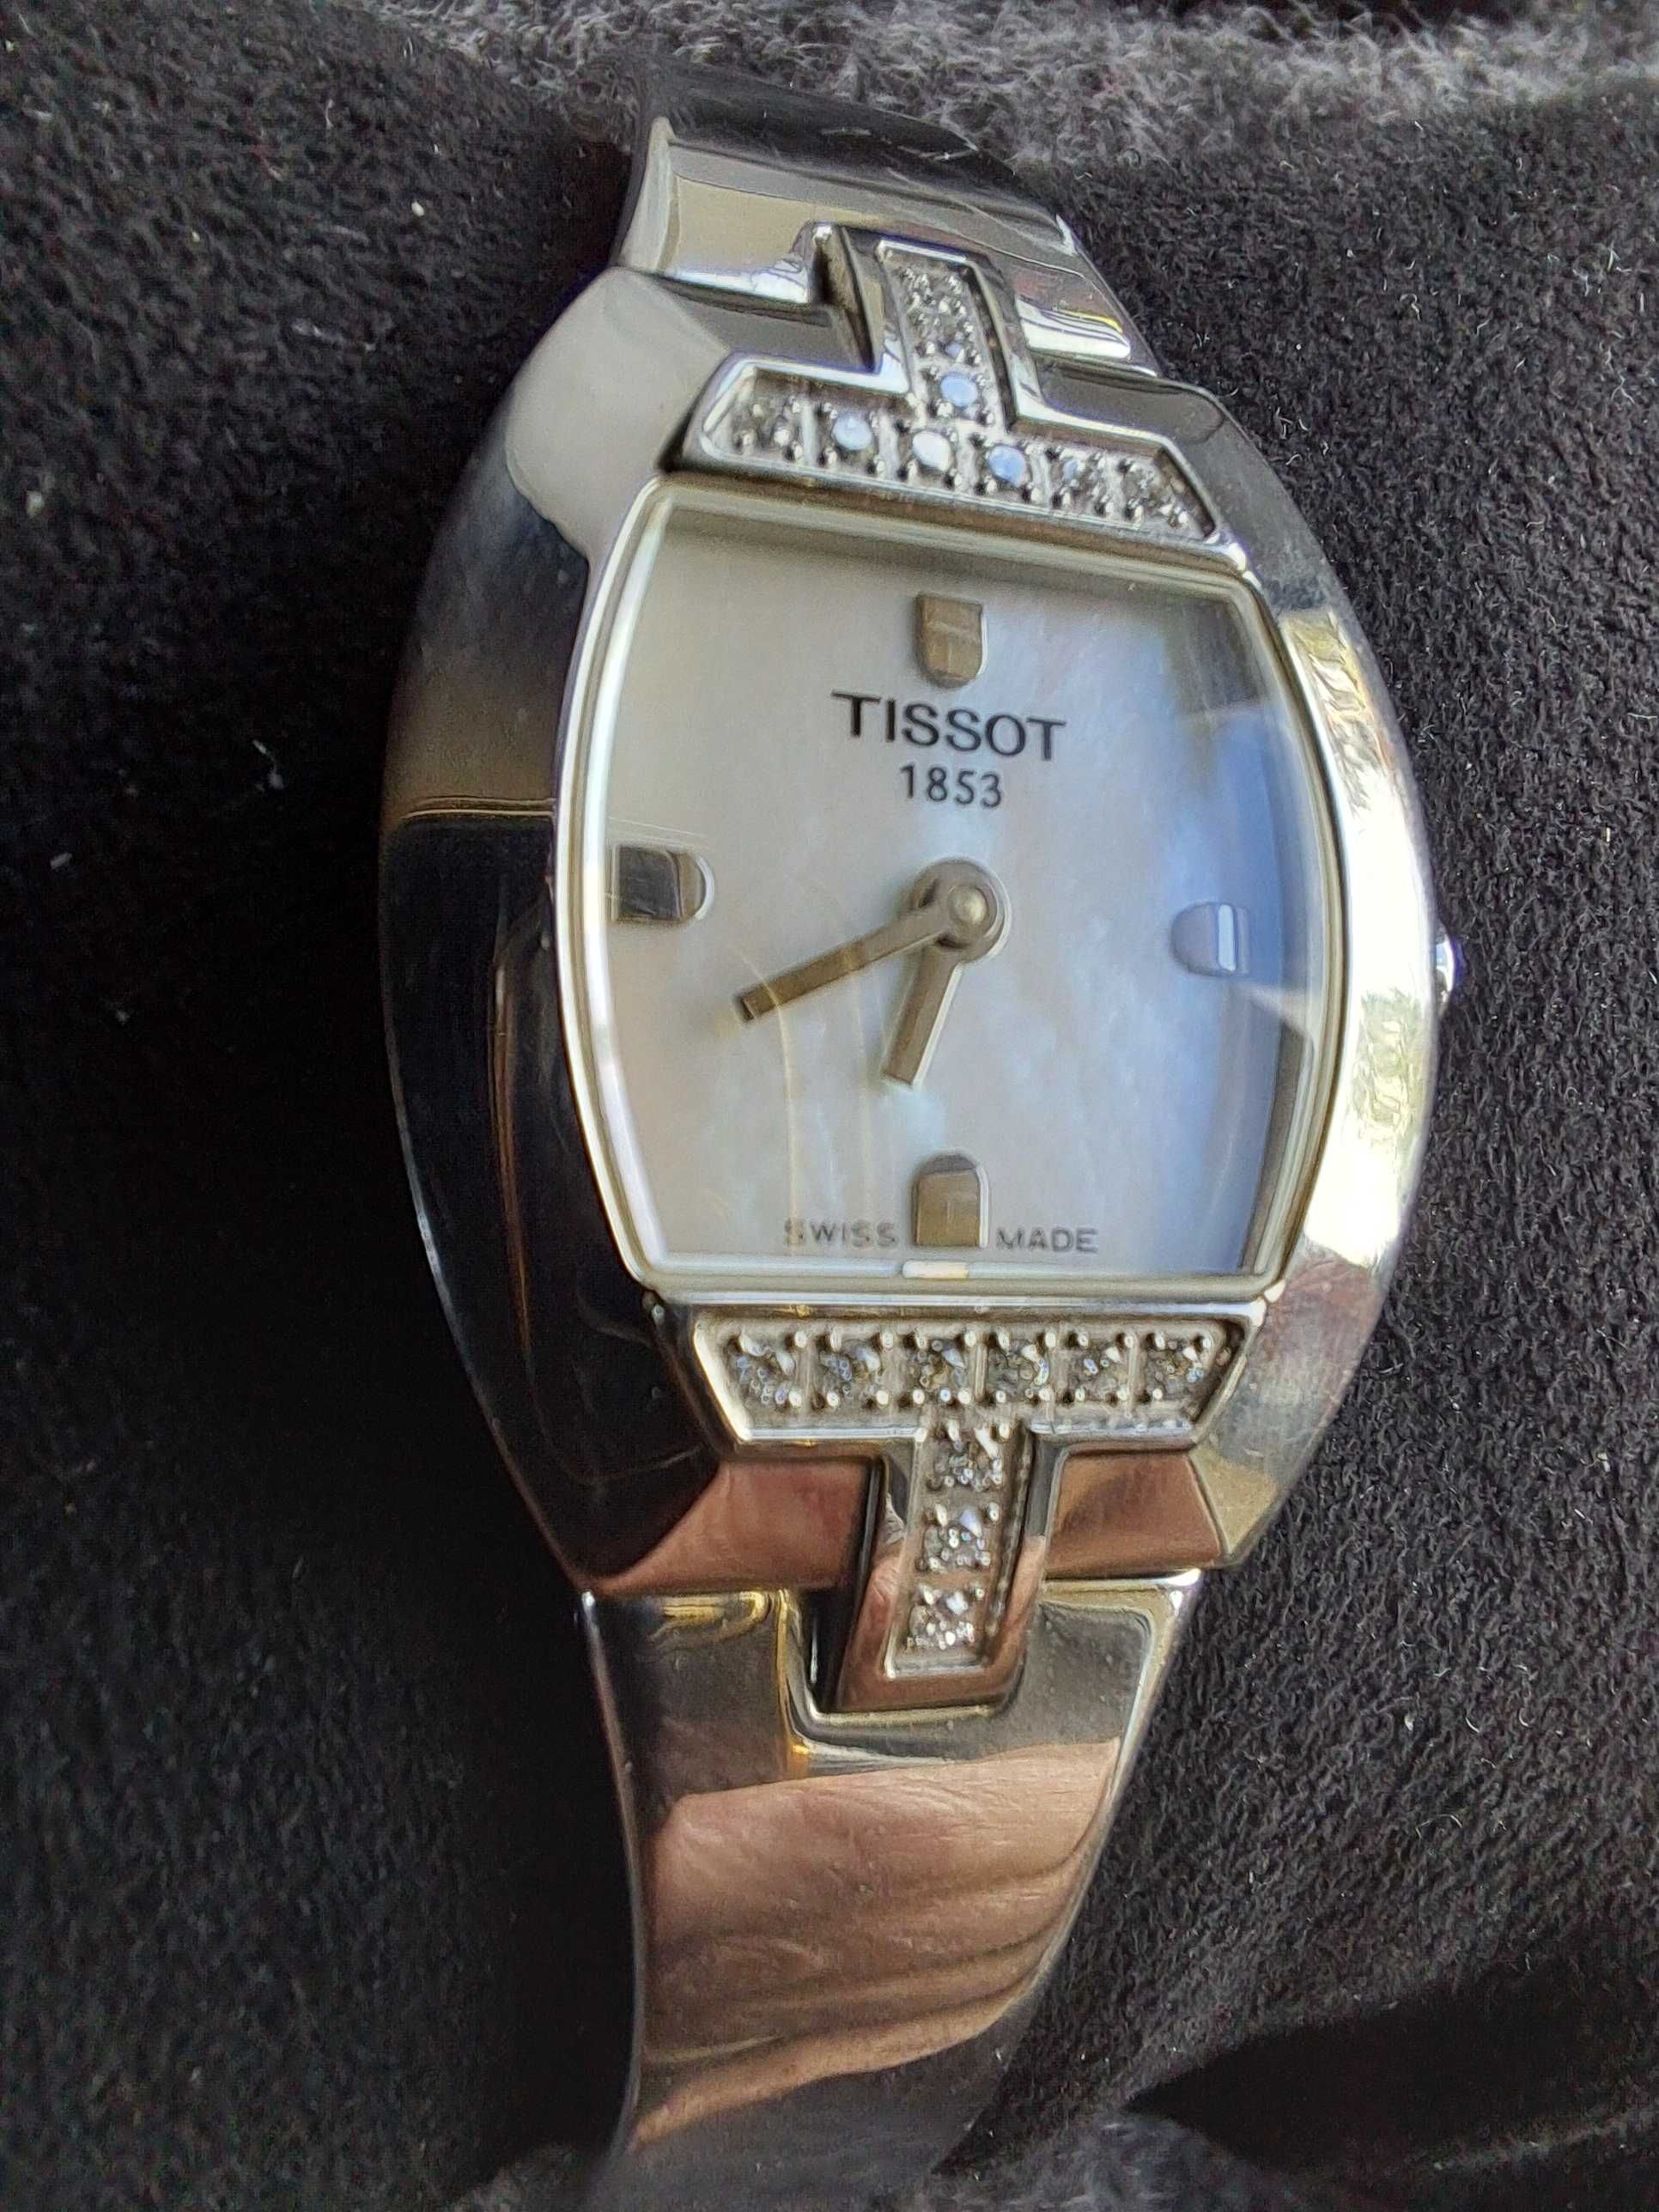 Damski zegarek Tissot TTONNEAU T621.29581 z diamentami. Piękny !